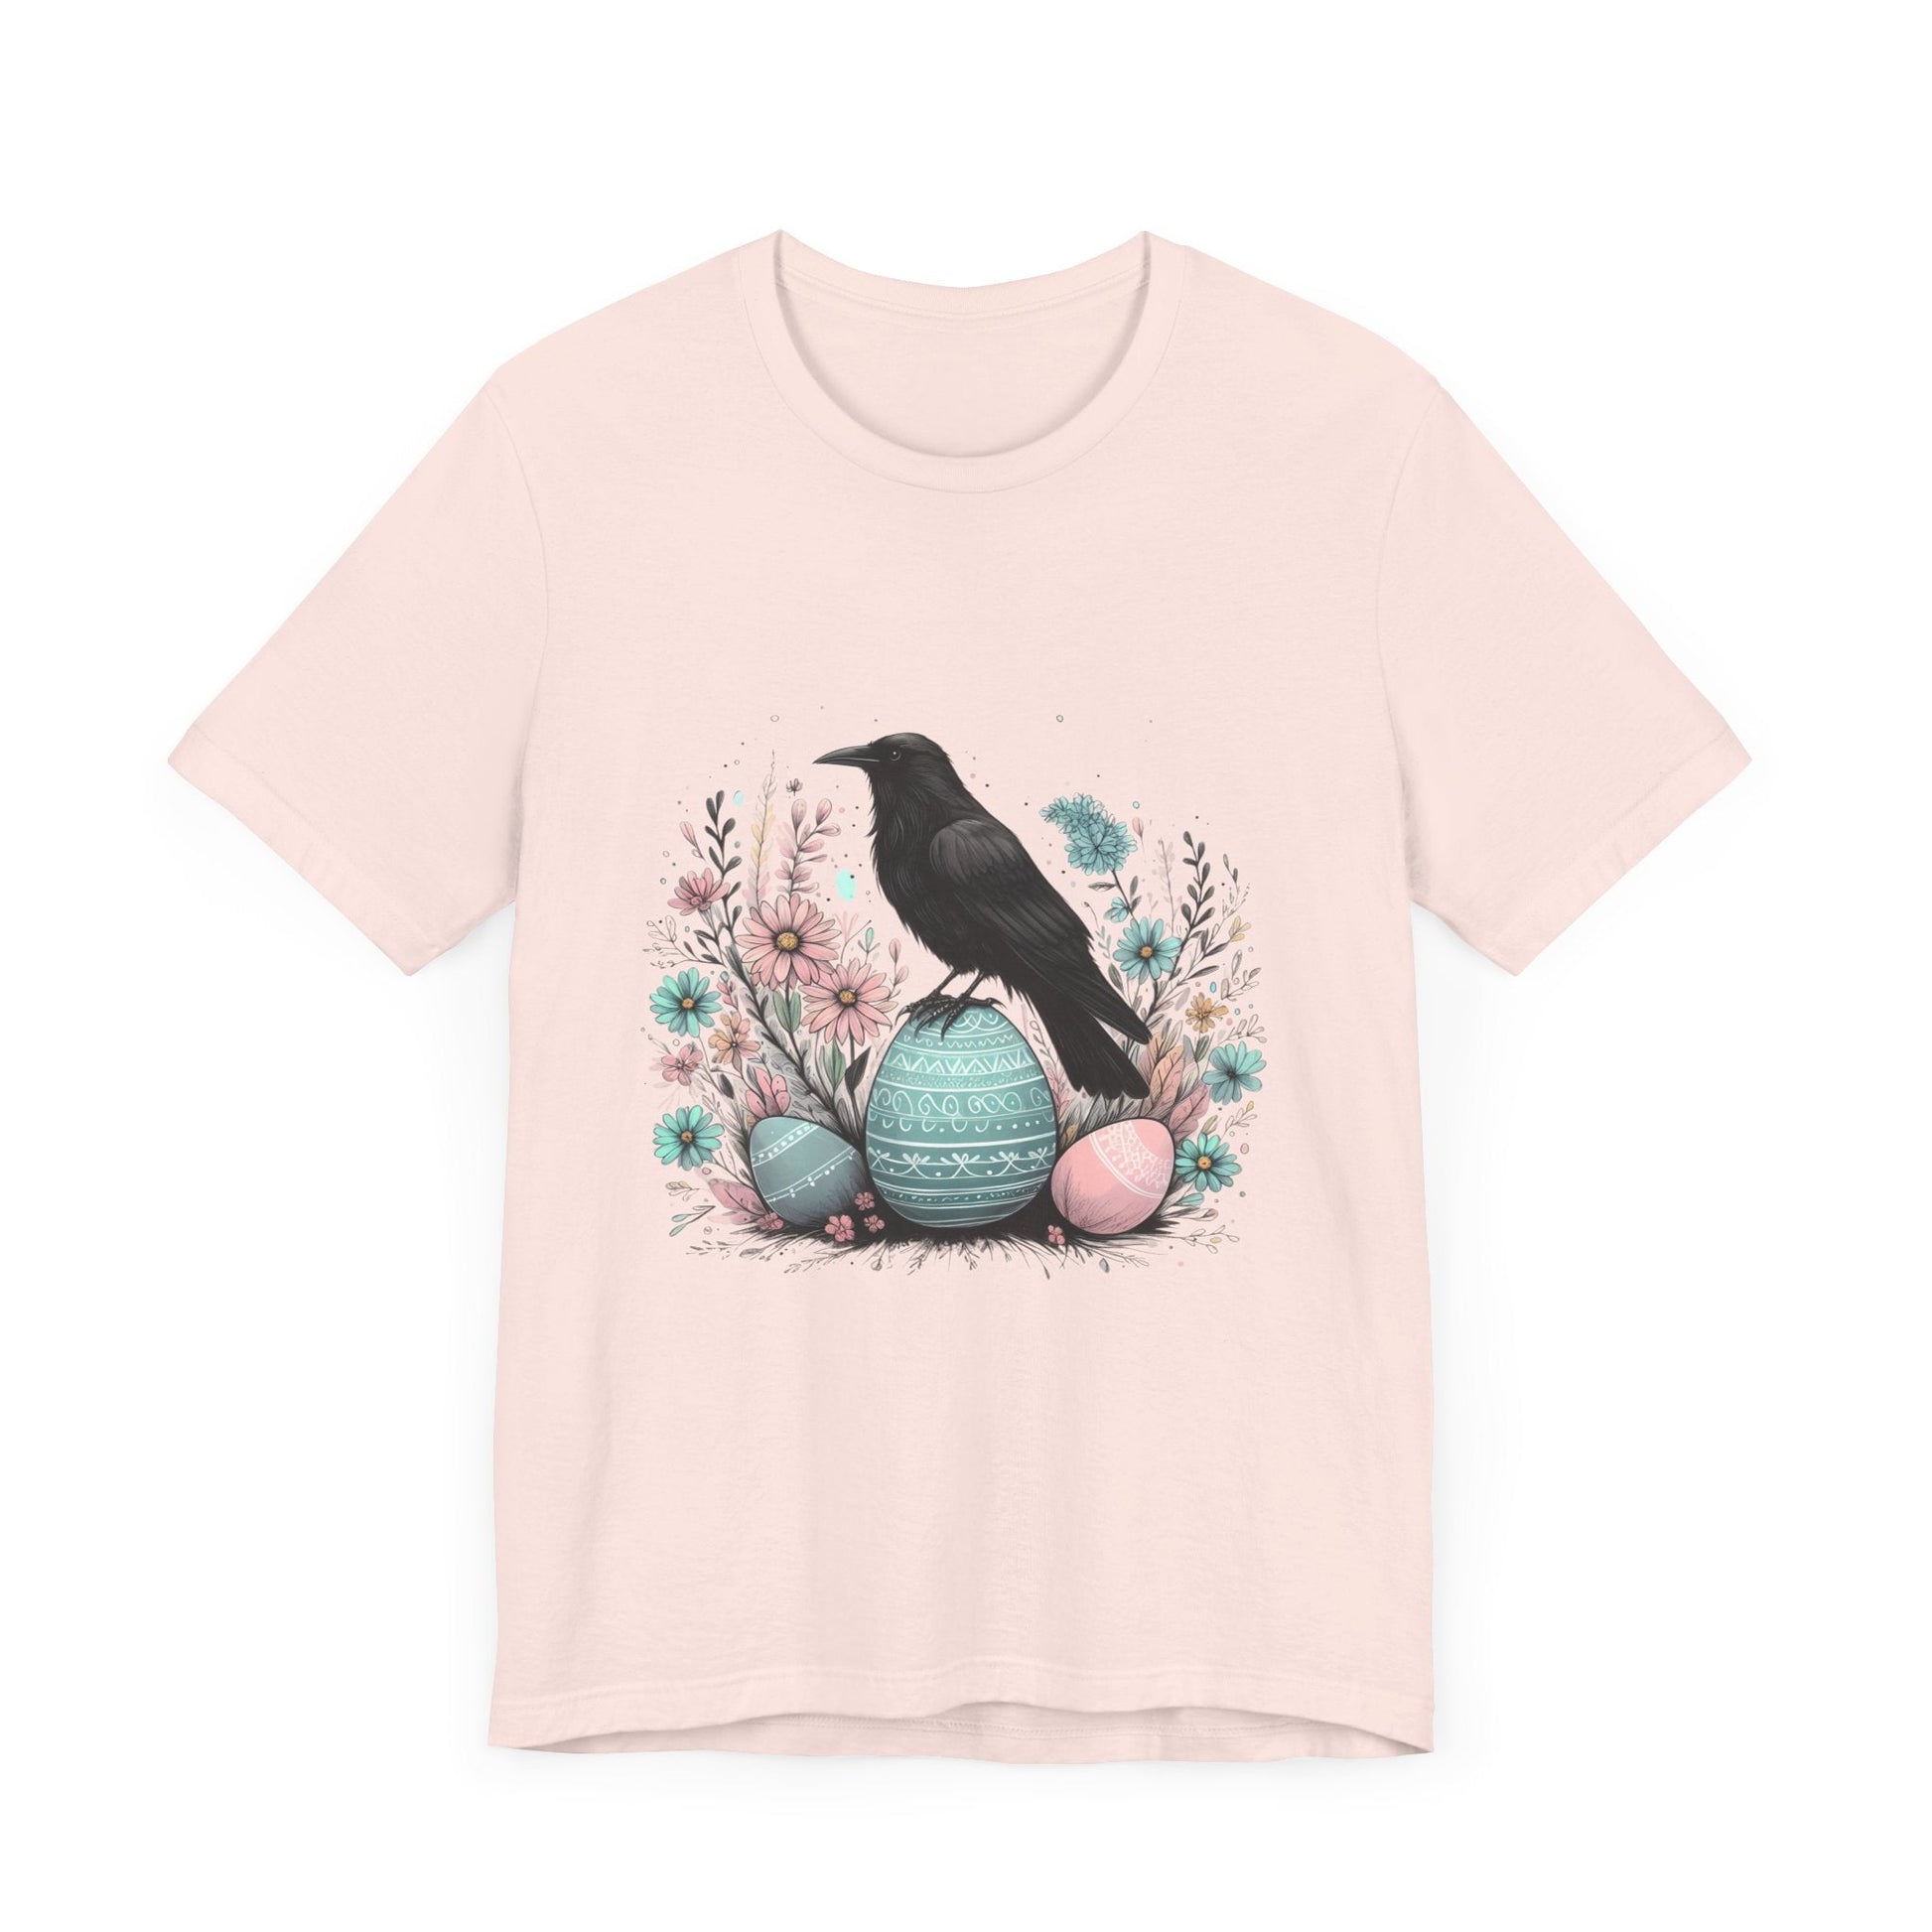 Raven On Easter Egg Short Sleeve Tee ShirtT - ShirtVTZdesignsSoft PinkXSCottonCrew neckcrow